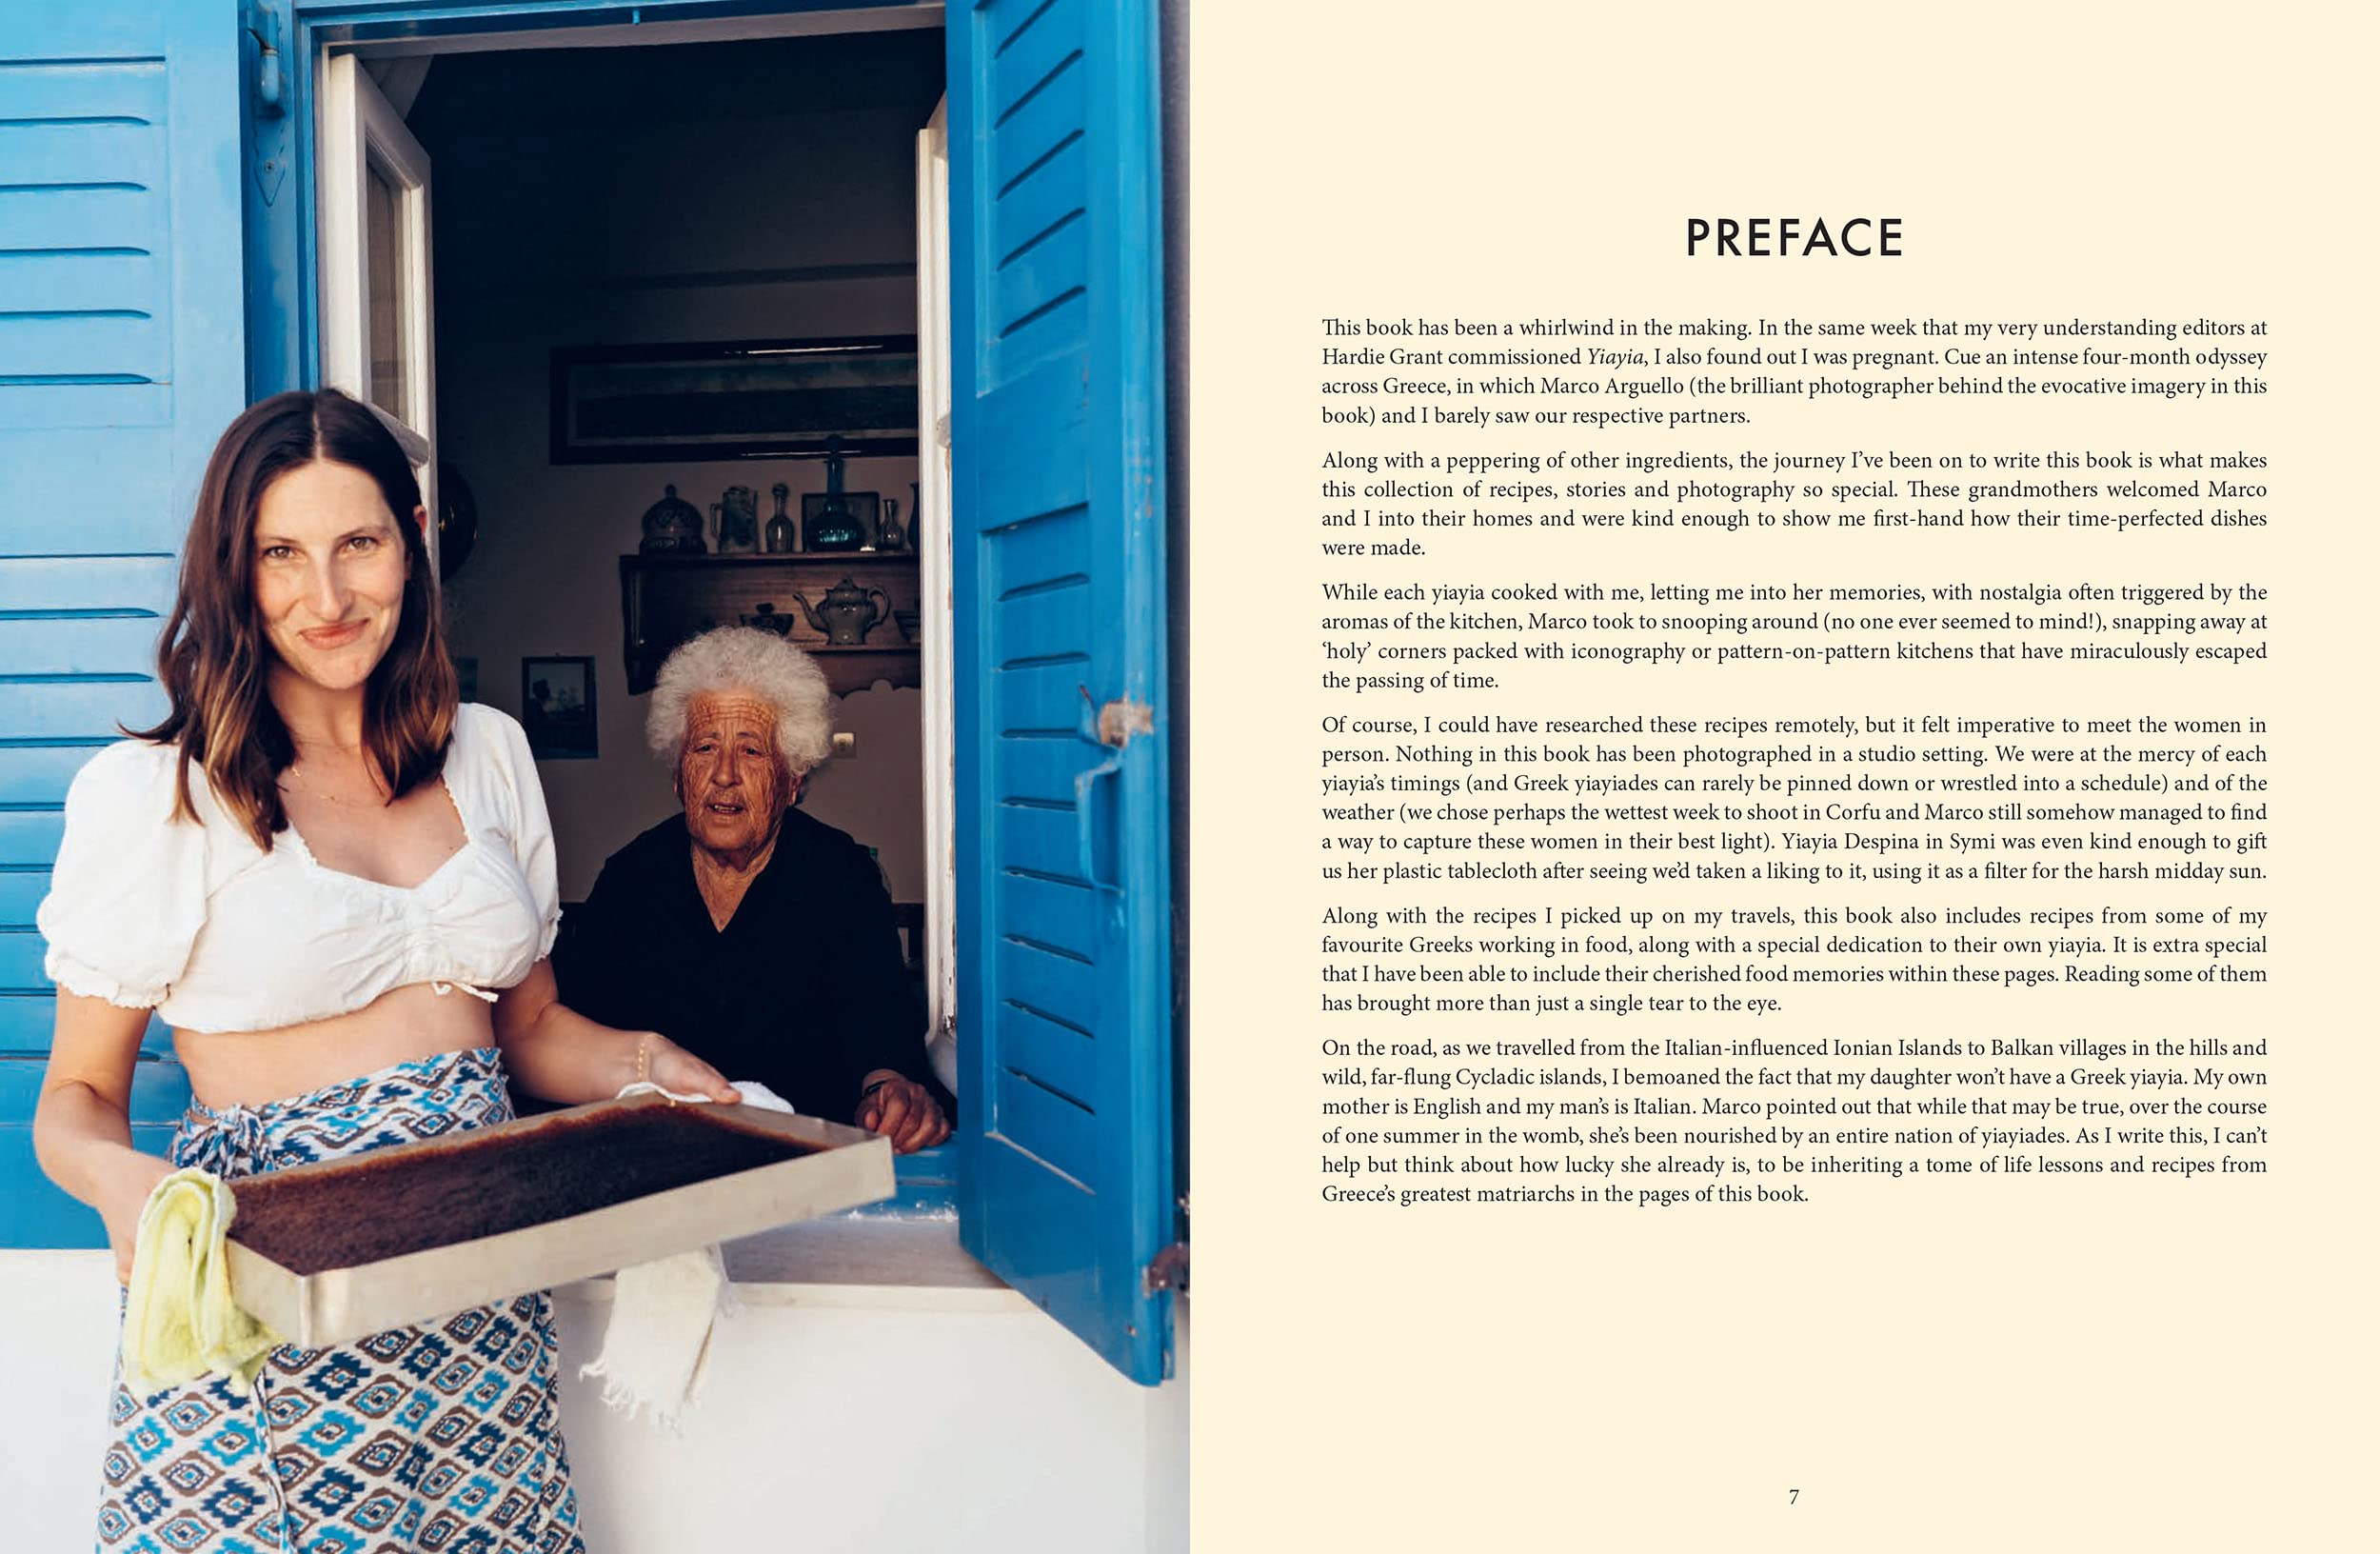 Yiayia: Time-perfected Recipes from Greece’s Grandmothers (Anastasia Miari)